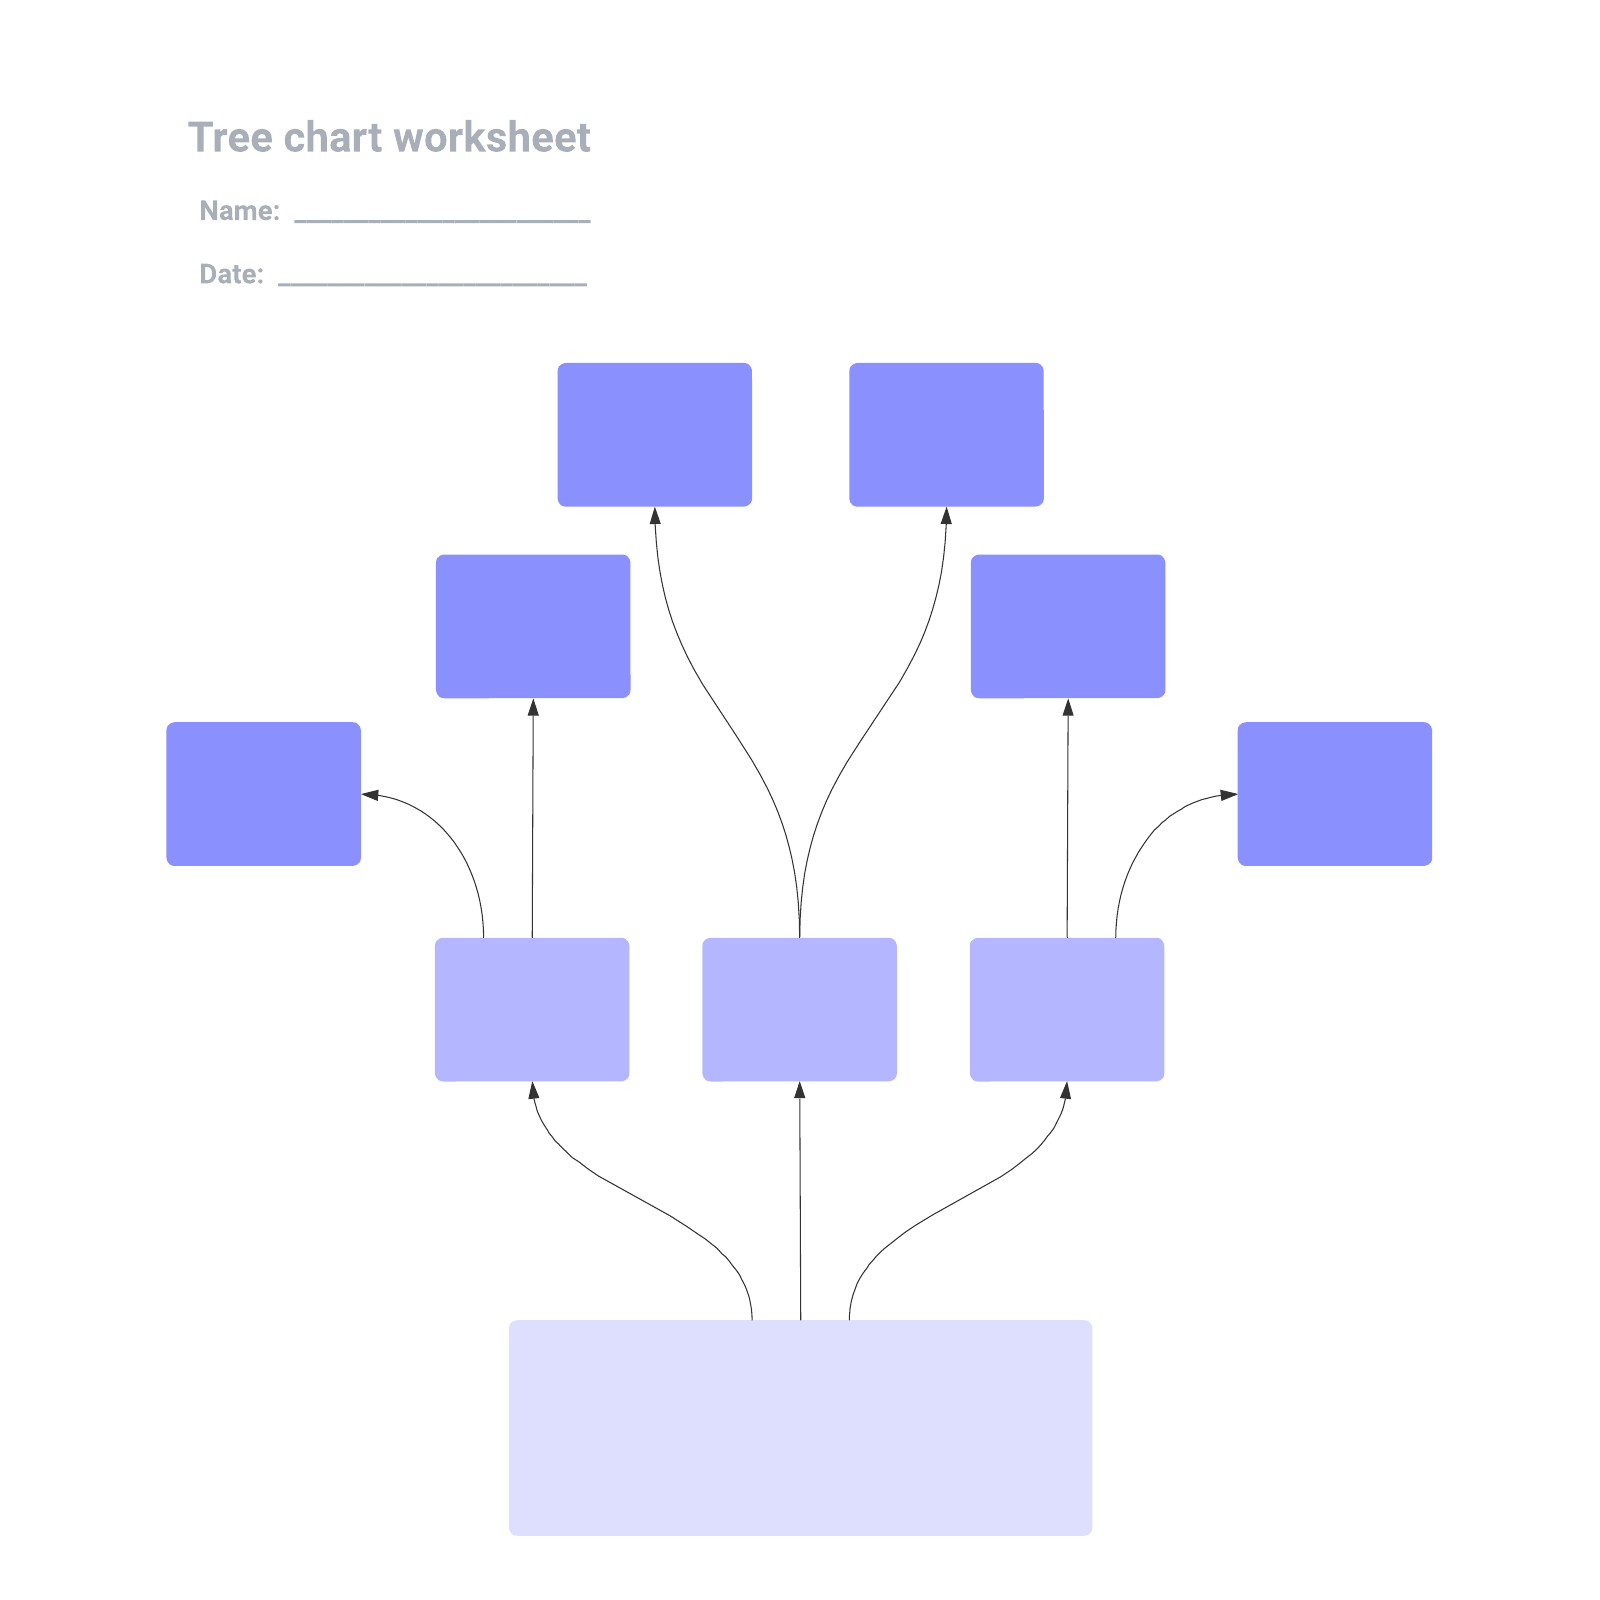 Tree chart worksheet example